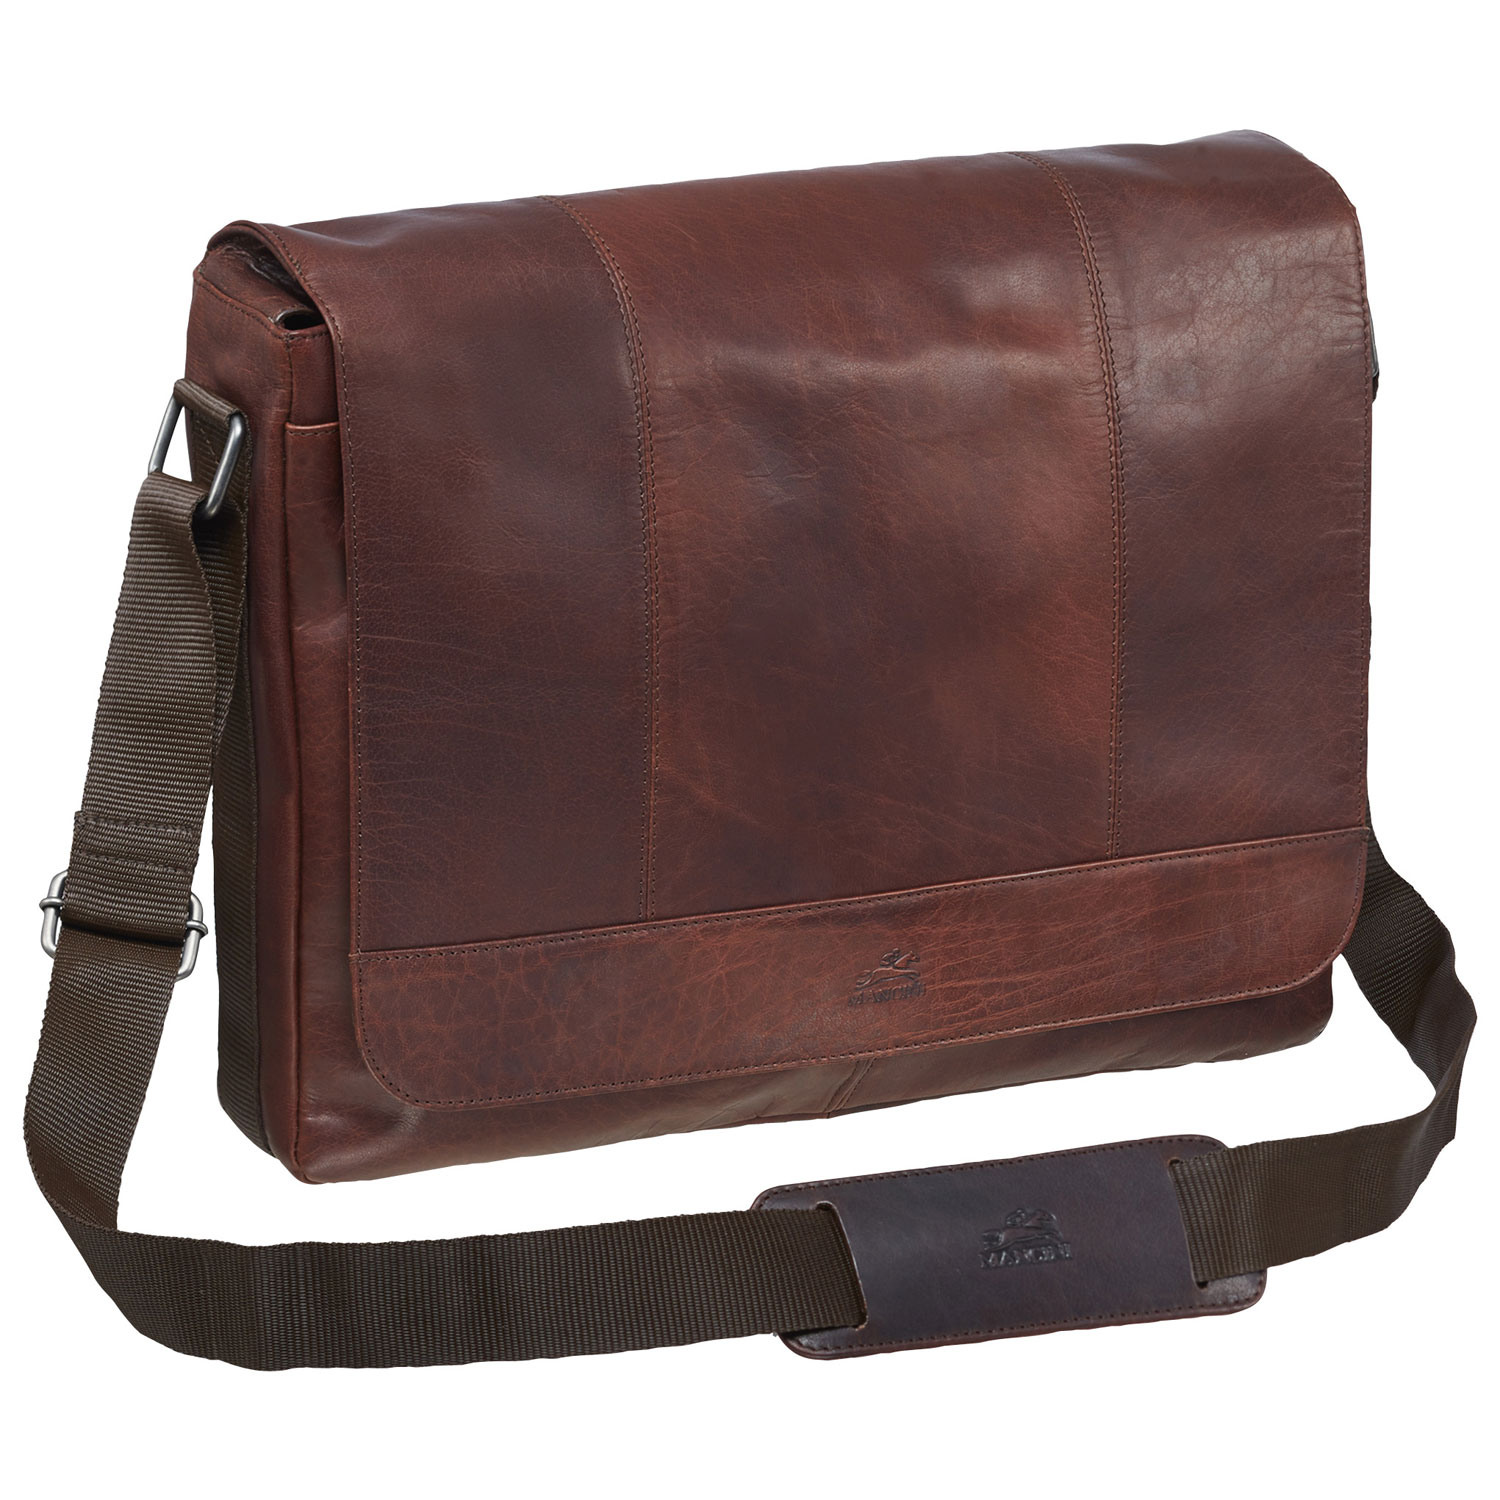 Mancini Buffalo Leather 15" Laptop Messenger Bag - Brown (99-5468)